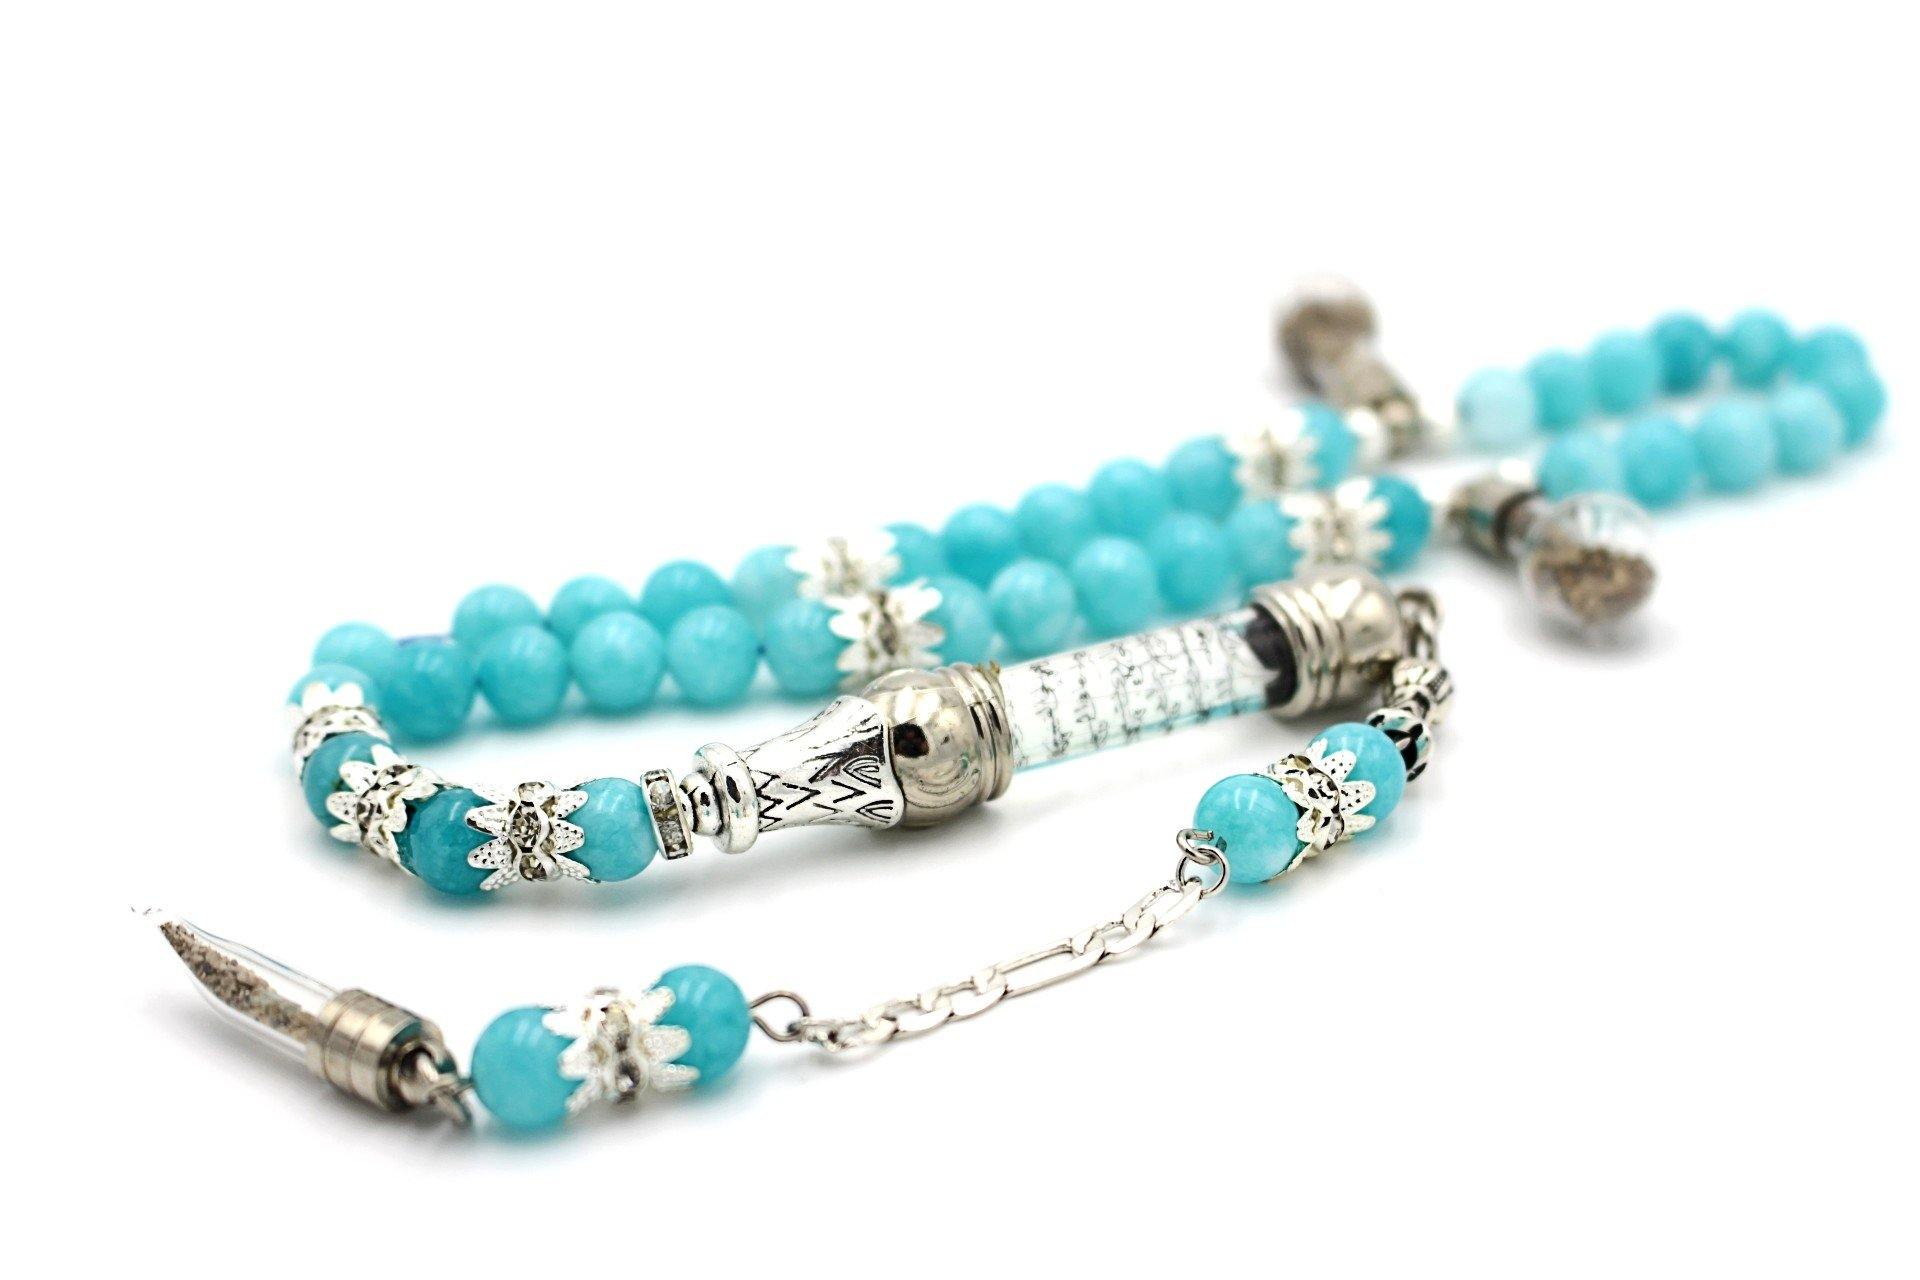 Aquamarine prayer beads gemstones silver jewellery luxury tesbih tasbeeh